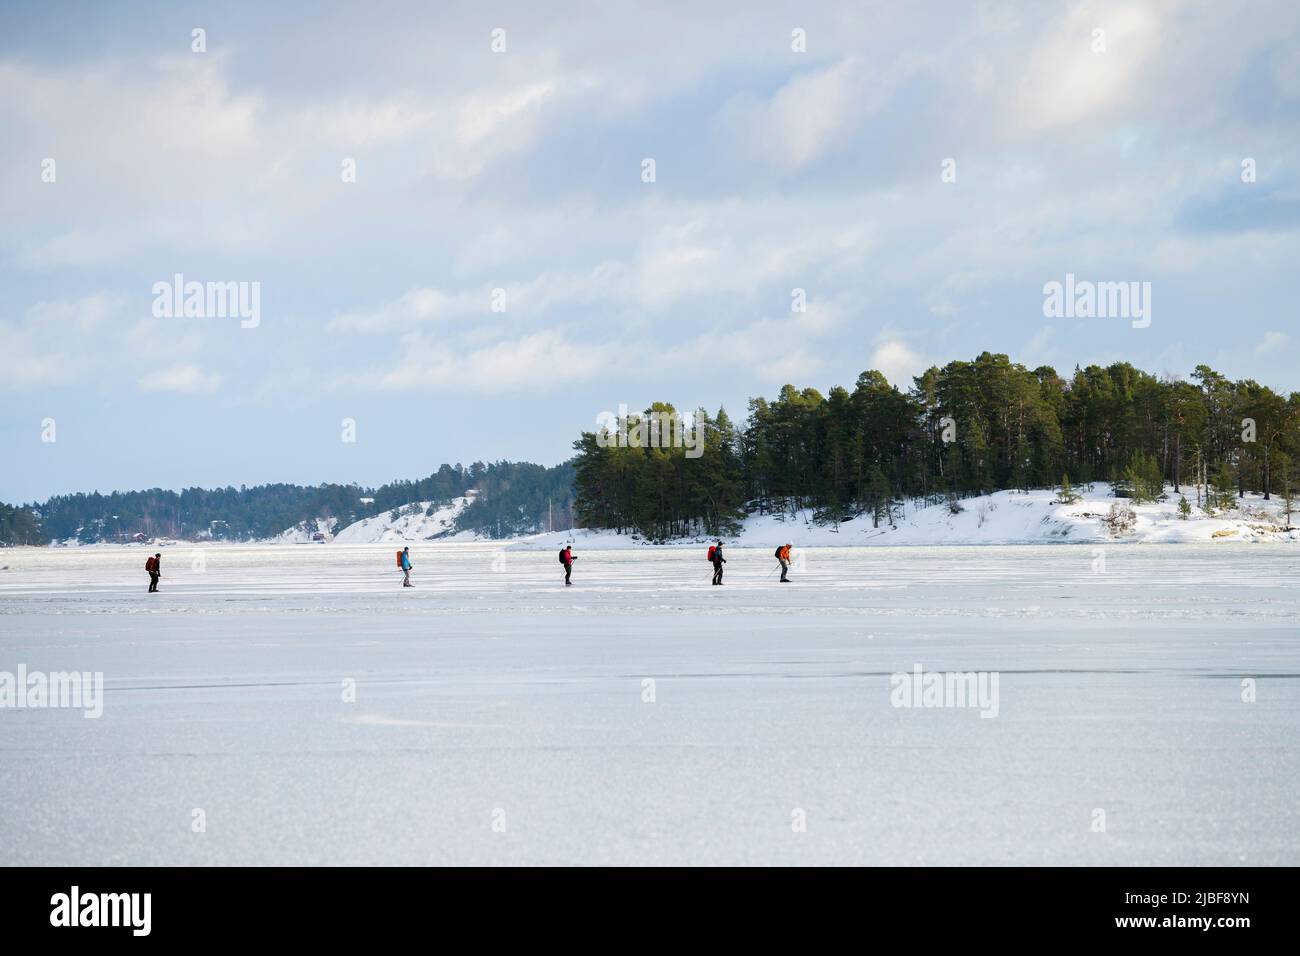 People ice skating on frozen lake Stock Photo